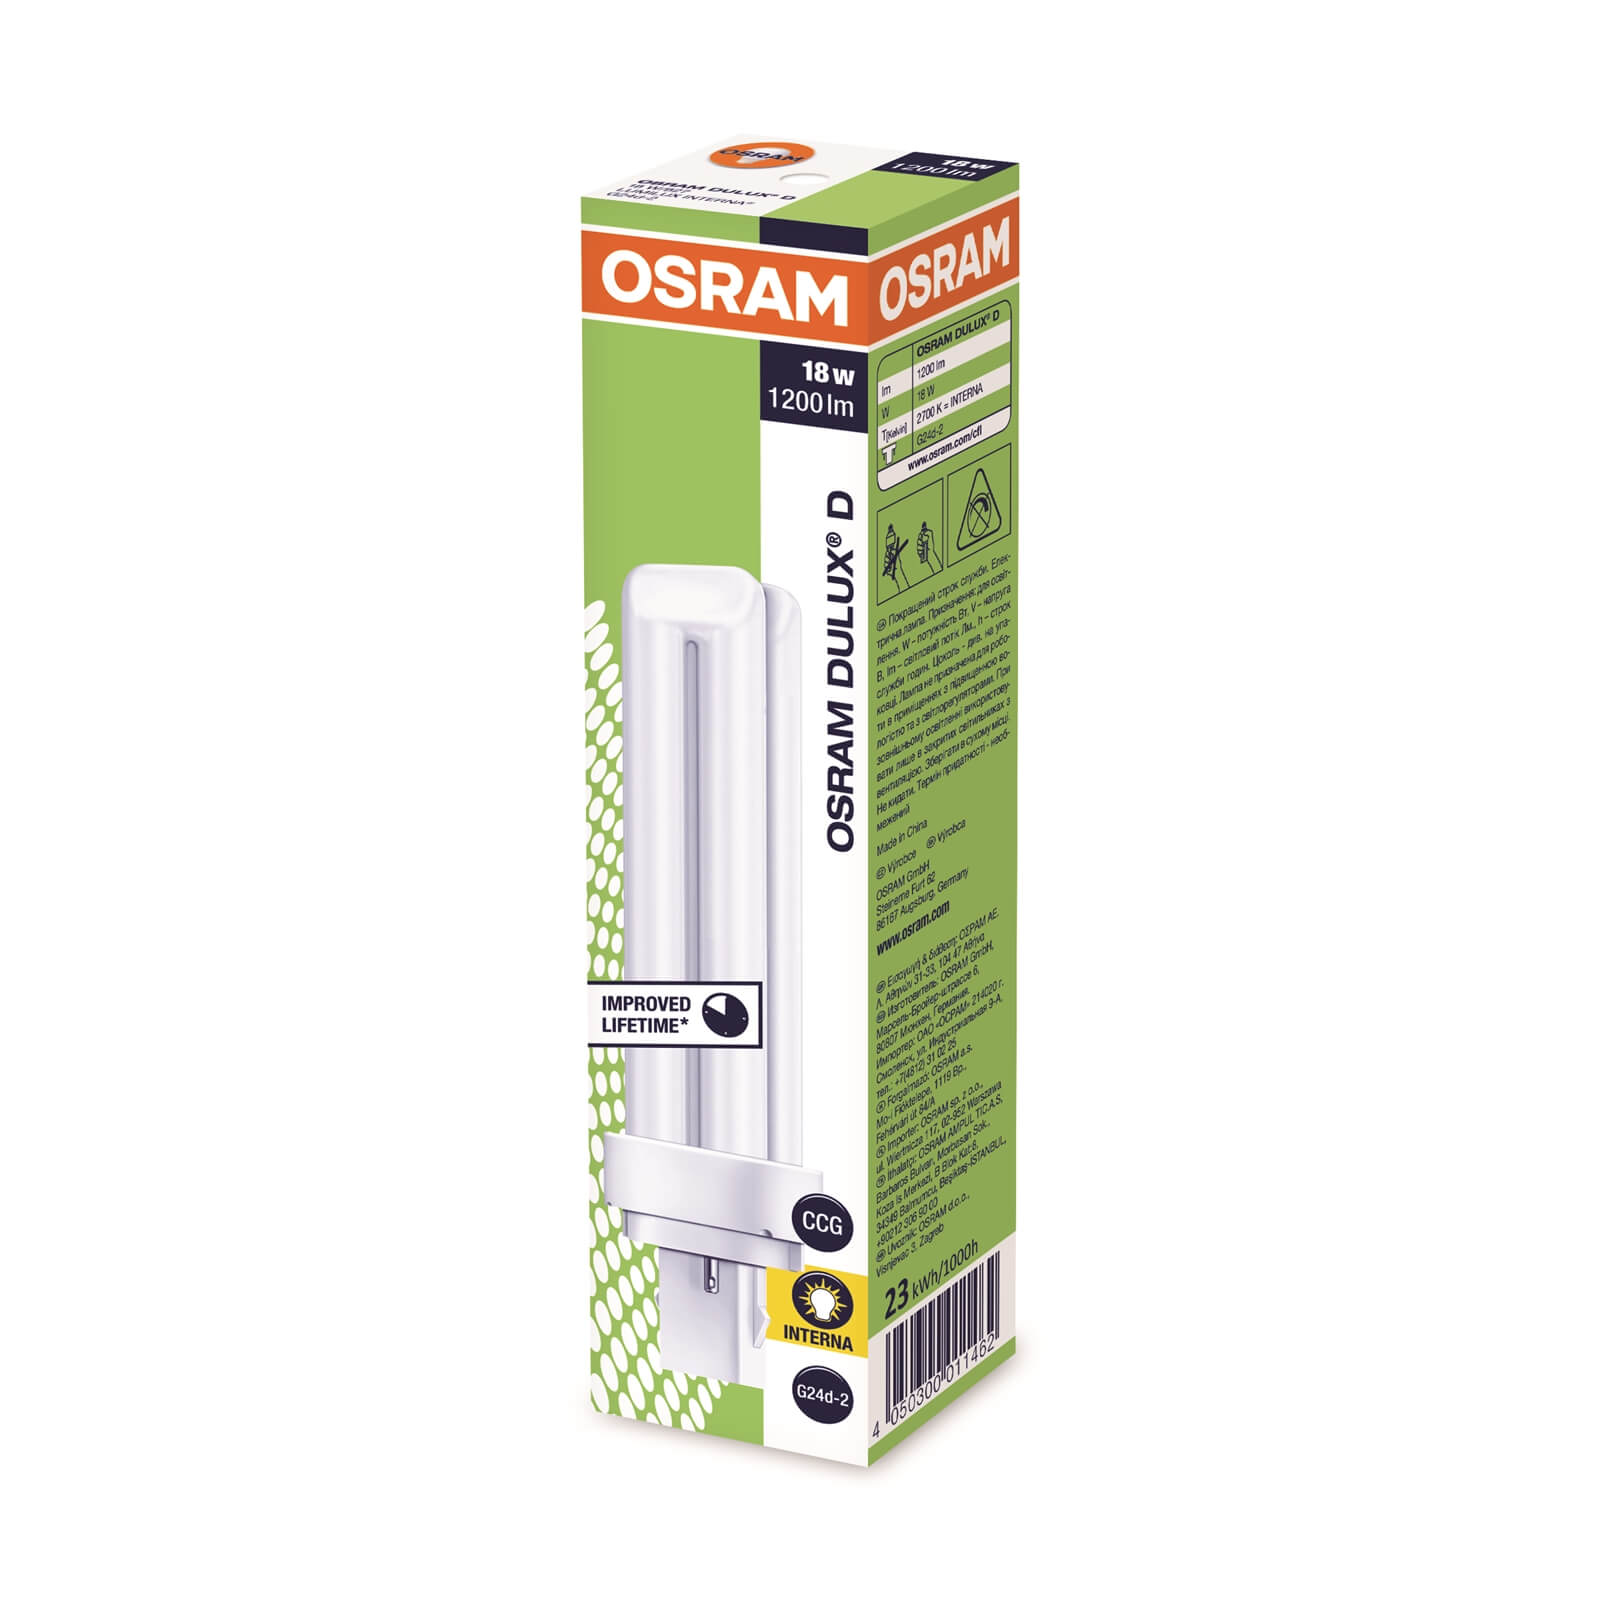 Osram CFL Dulux 2 Pin 18W Light Bulb